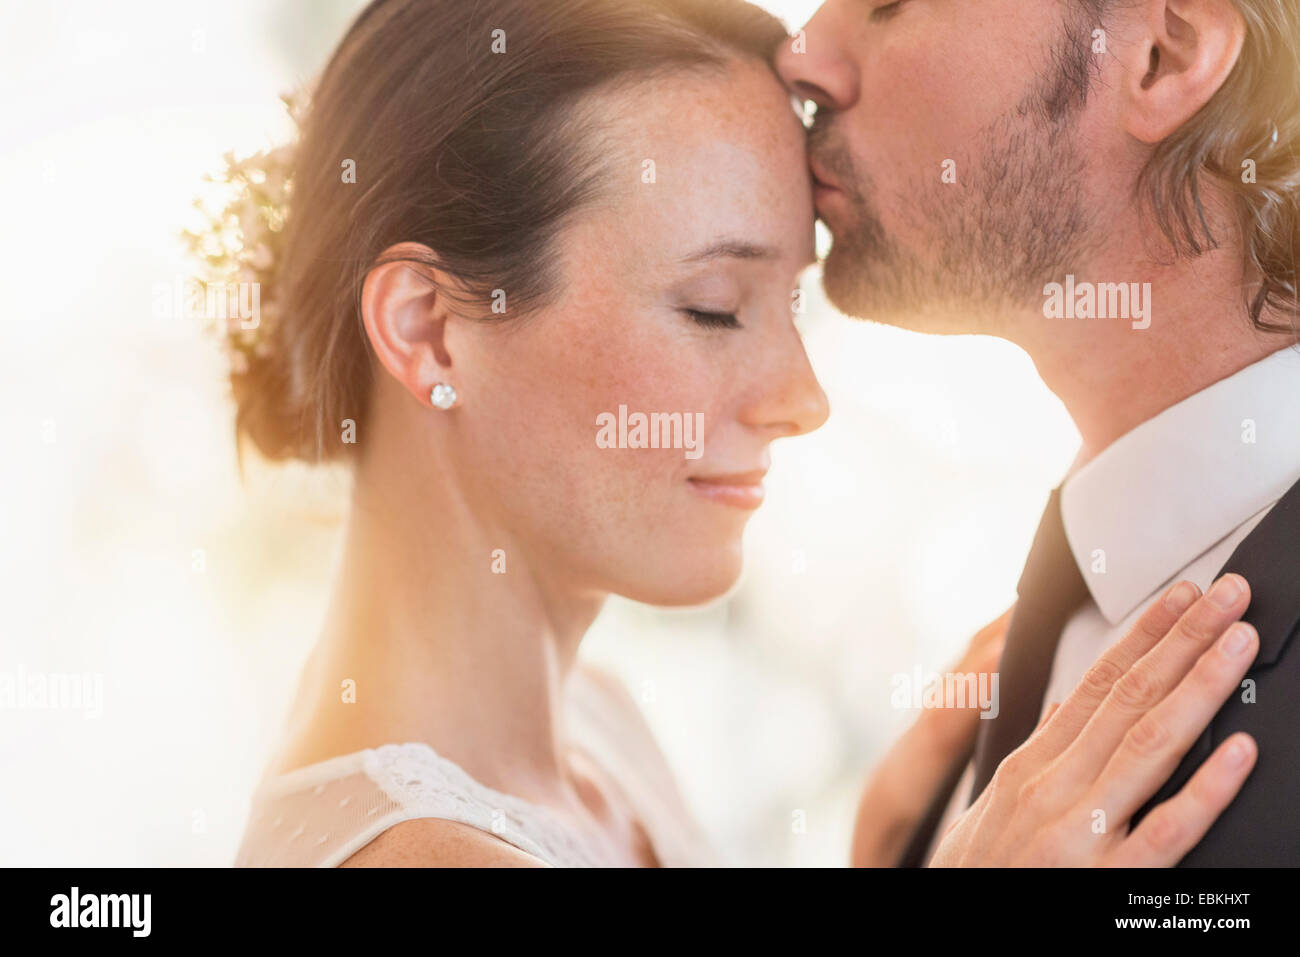 Groom kissing bride Stock Photo